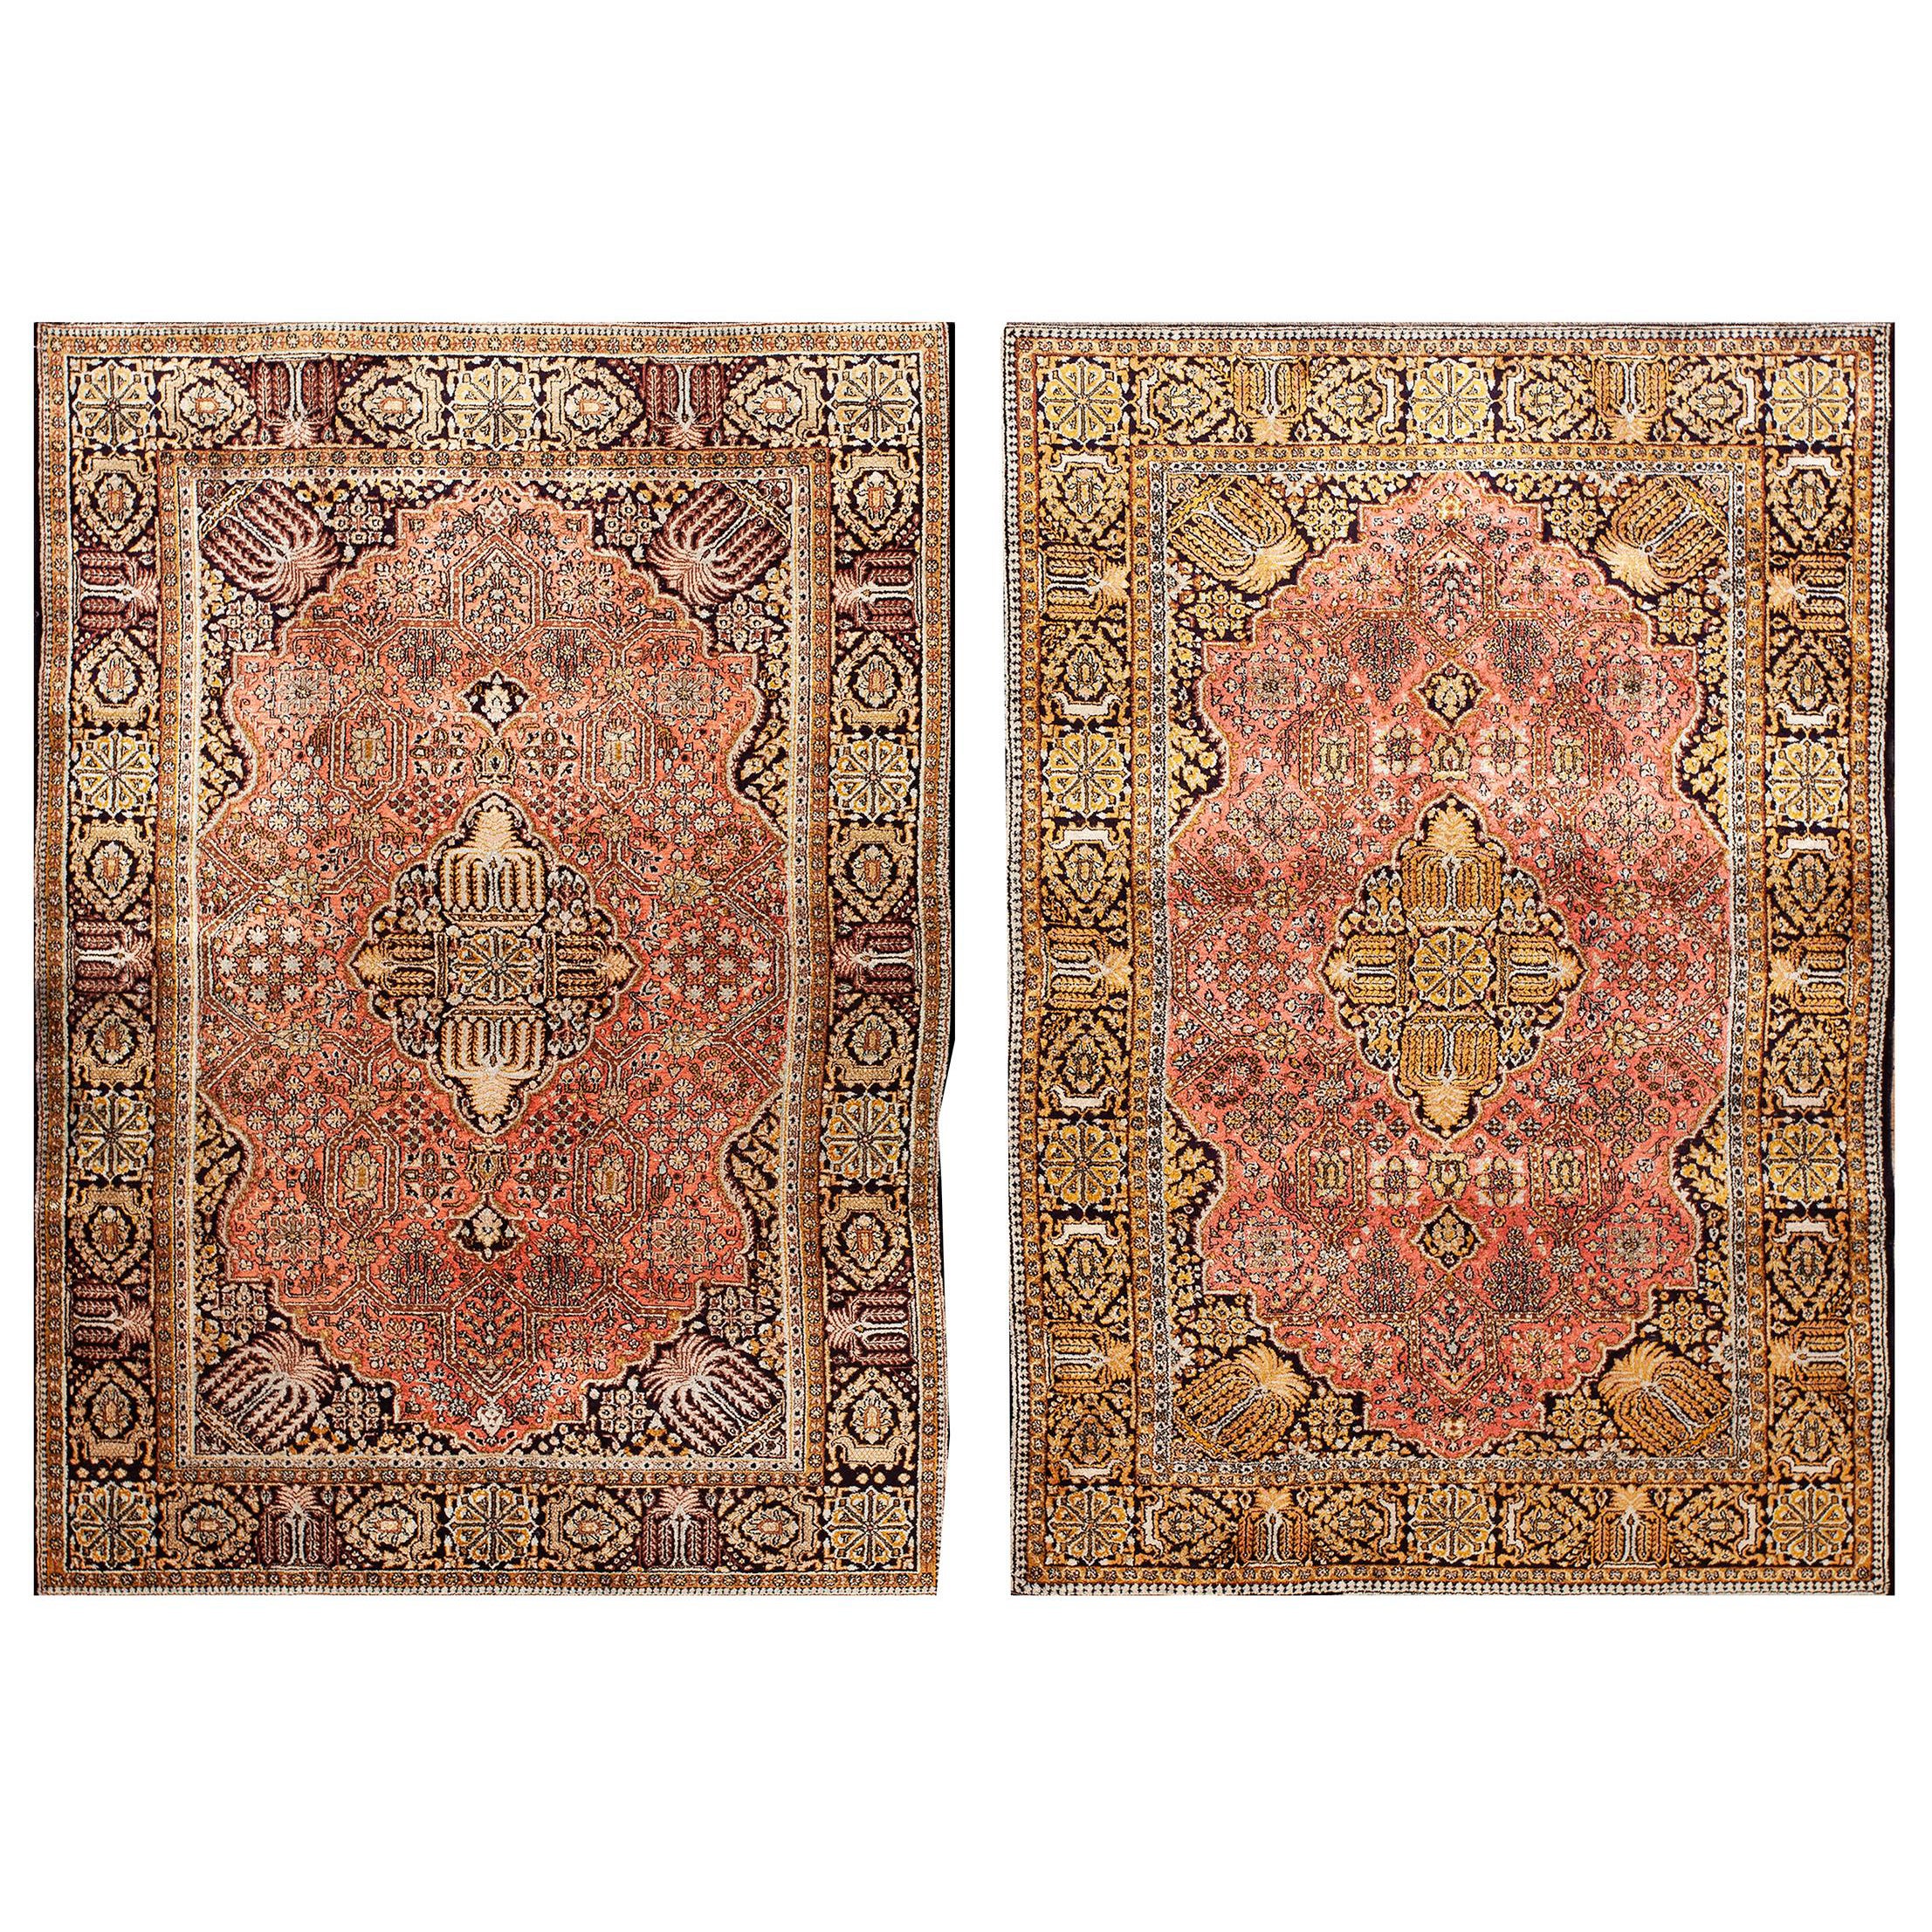 Pair of Mid 20th Century Persian Silk Qum Carpets (3' 7'' x 5' 2'' - 110 x 158) For Sale